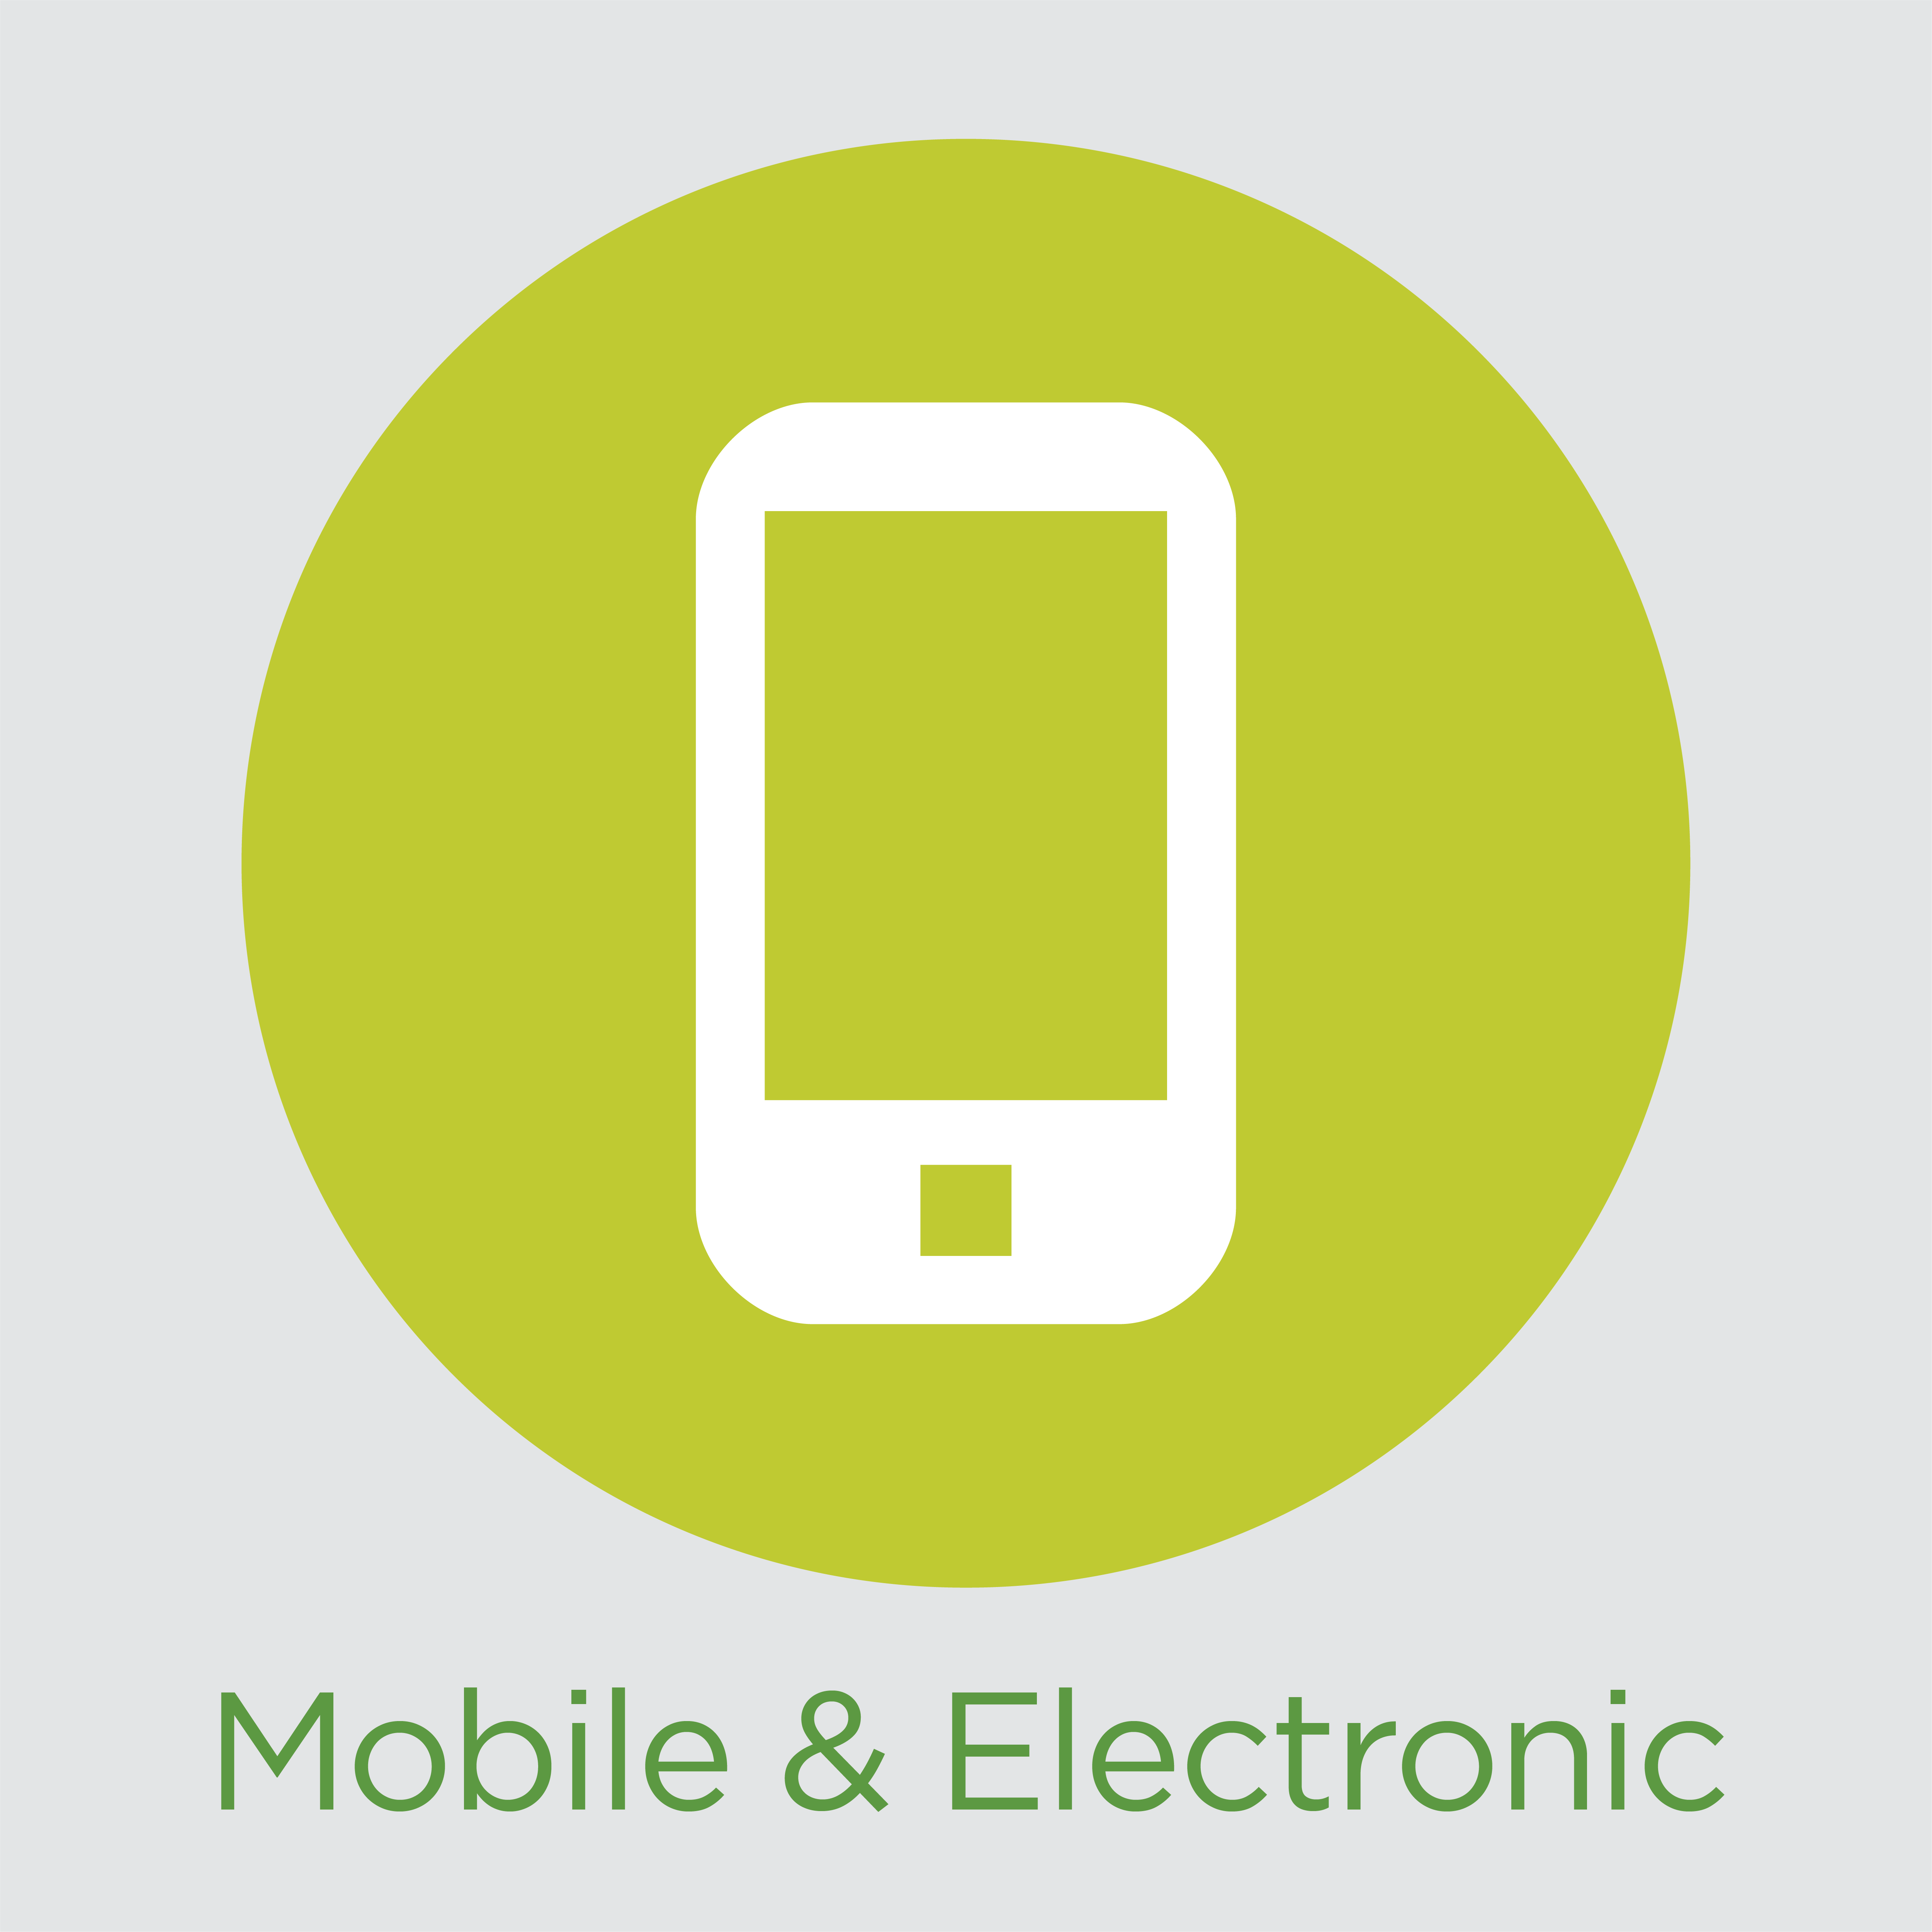 Mobile & Electronic